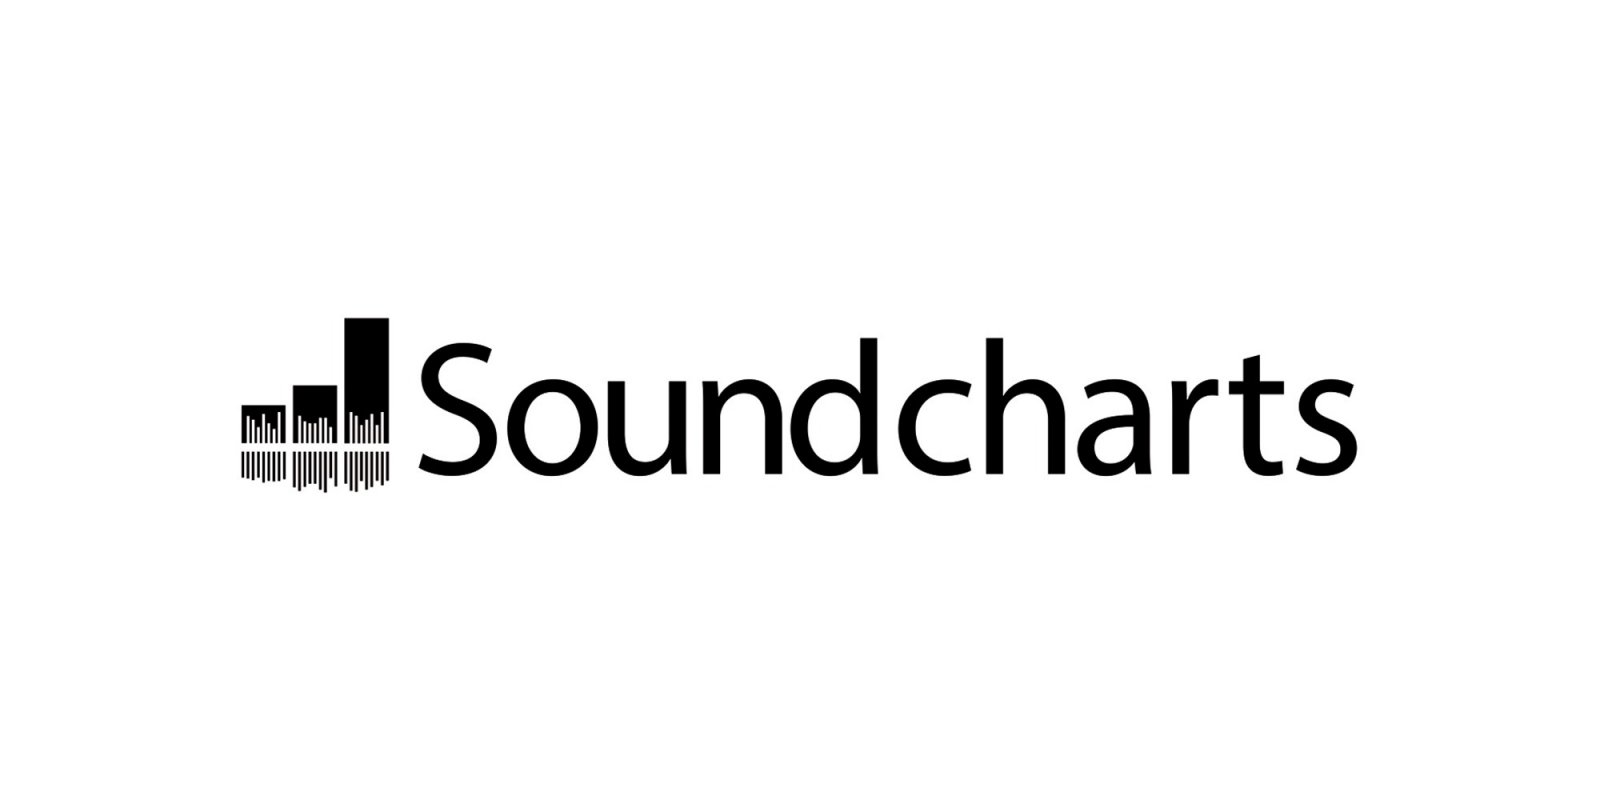 Mer information om "The Music Analytics Platform Soundcharts Launching in Scandinavia"